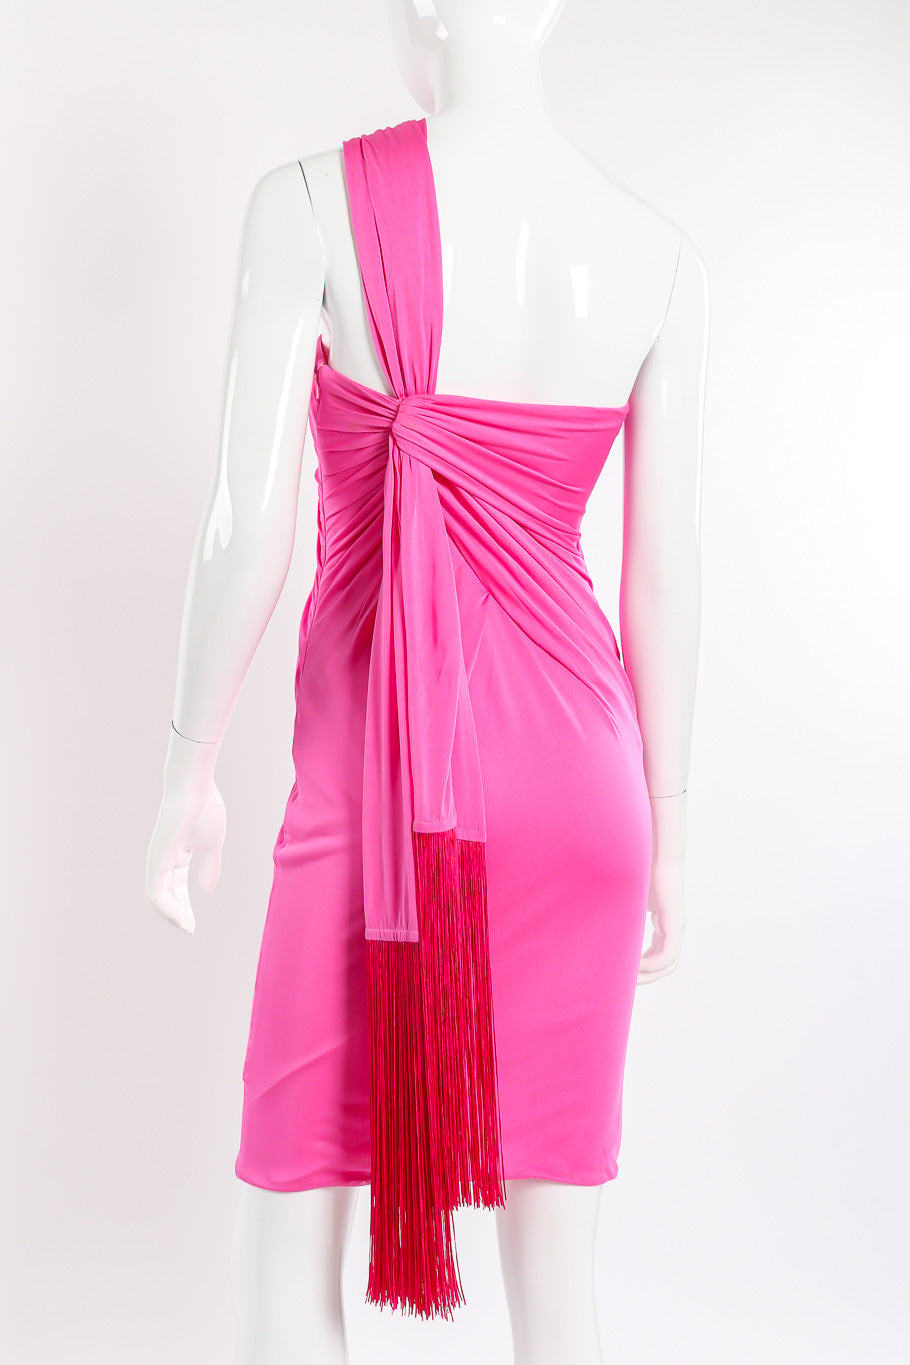 Versace Ruche One-Shoulder Dress back view closeup on mannequin @Recessla